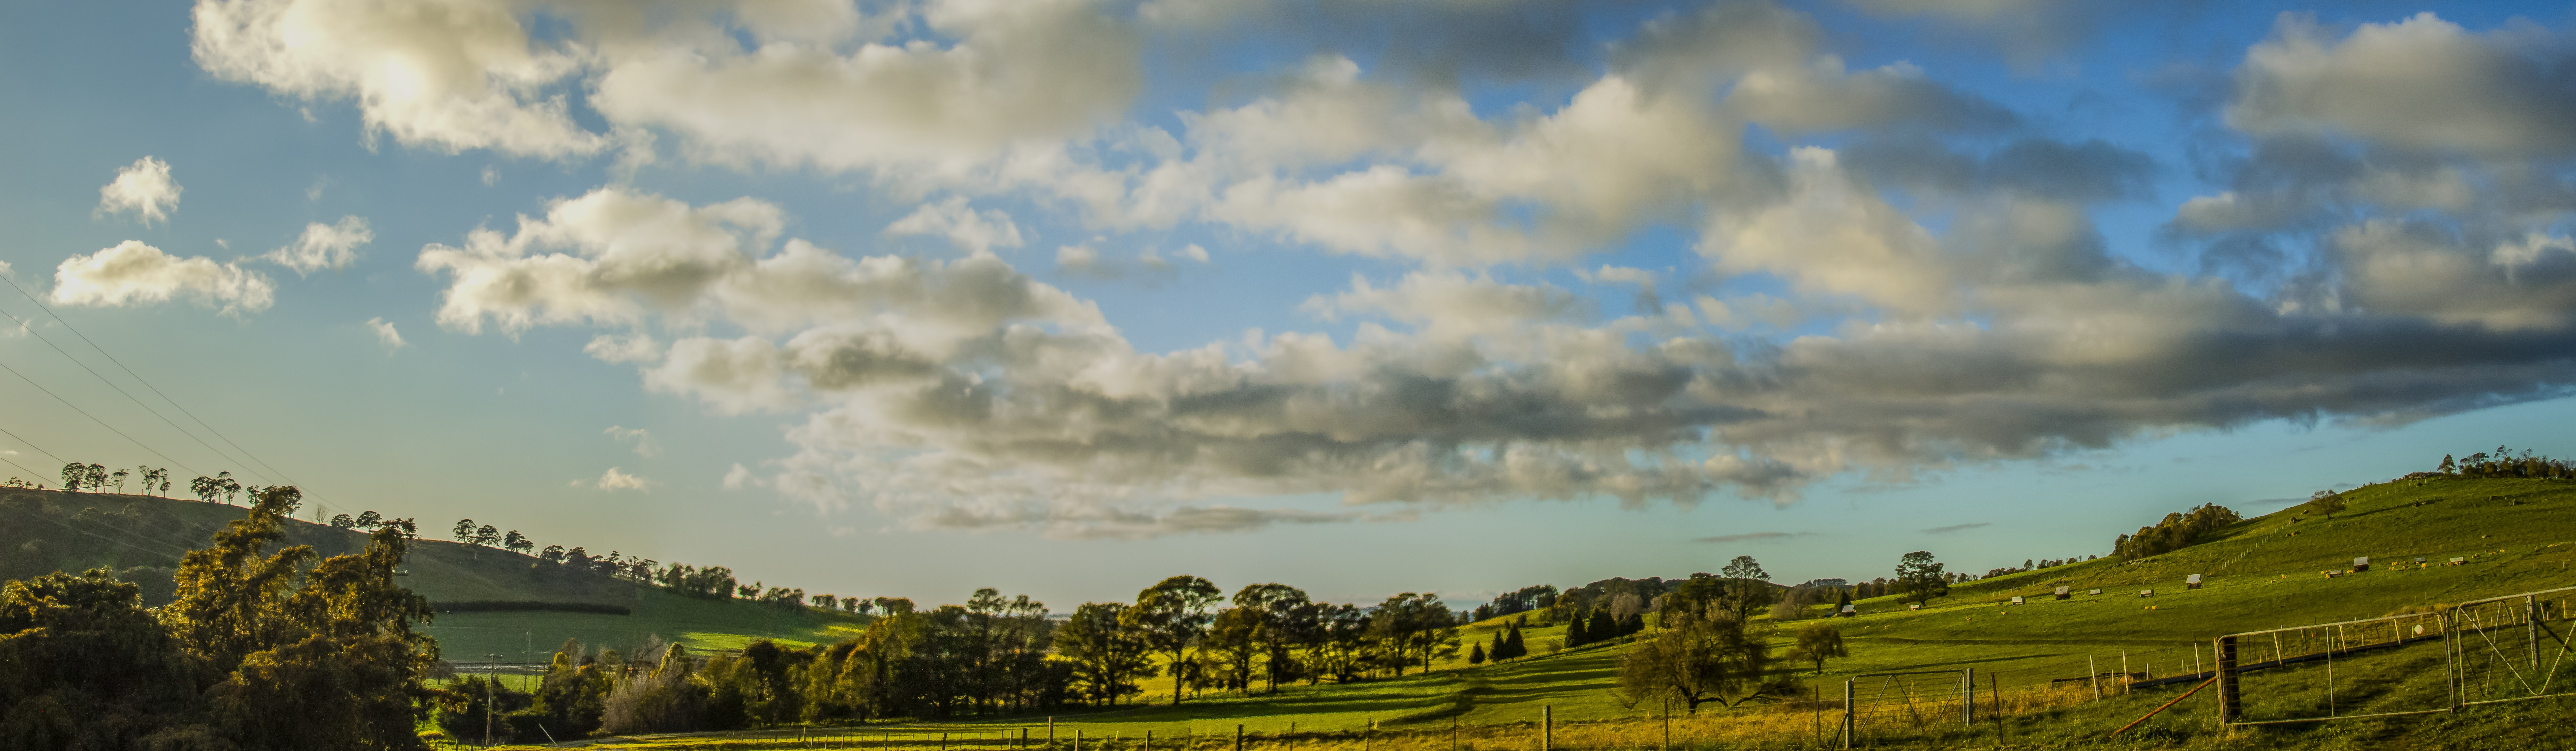 Scenic view across grazing pastures in Millthorpe